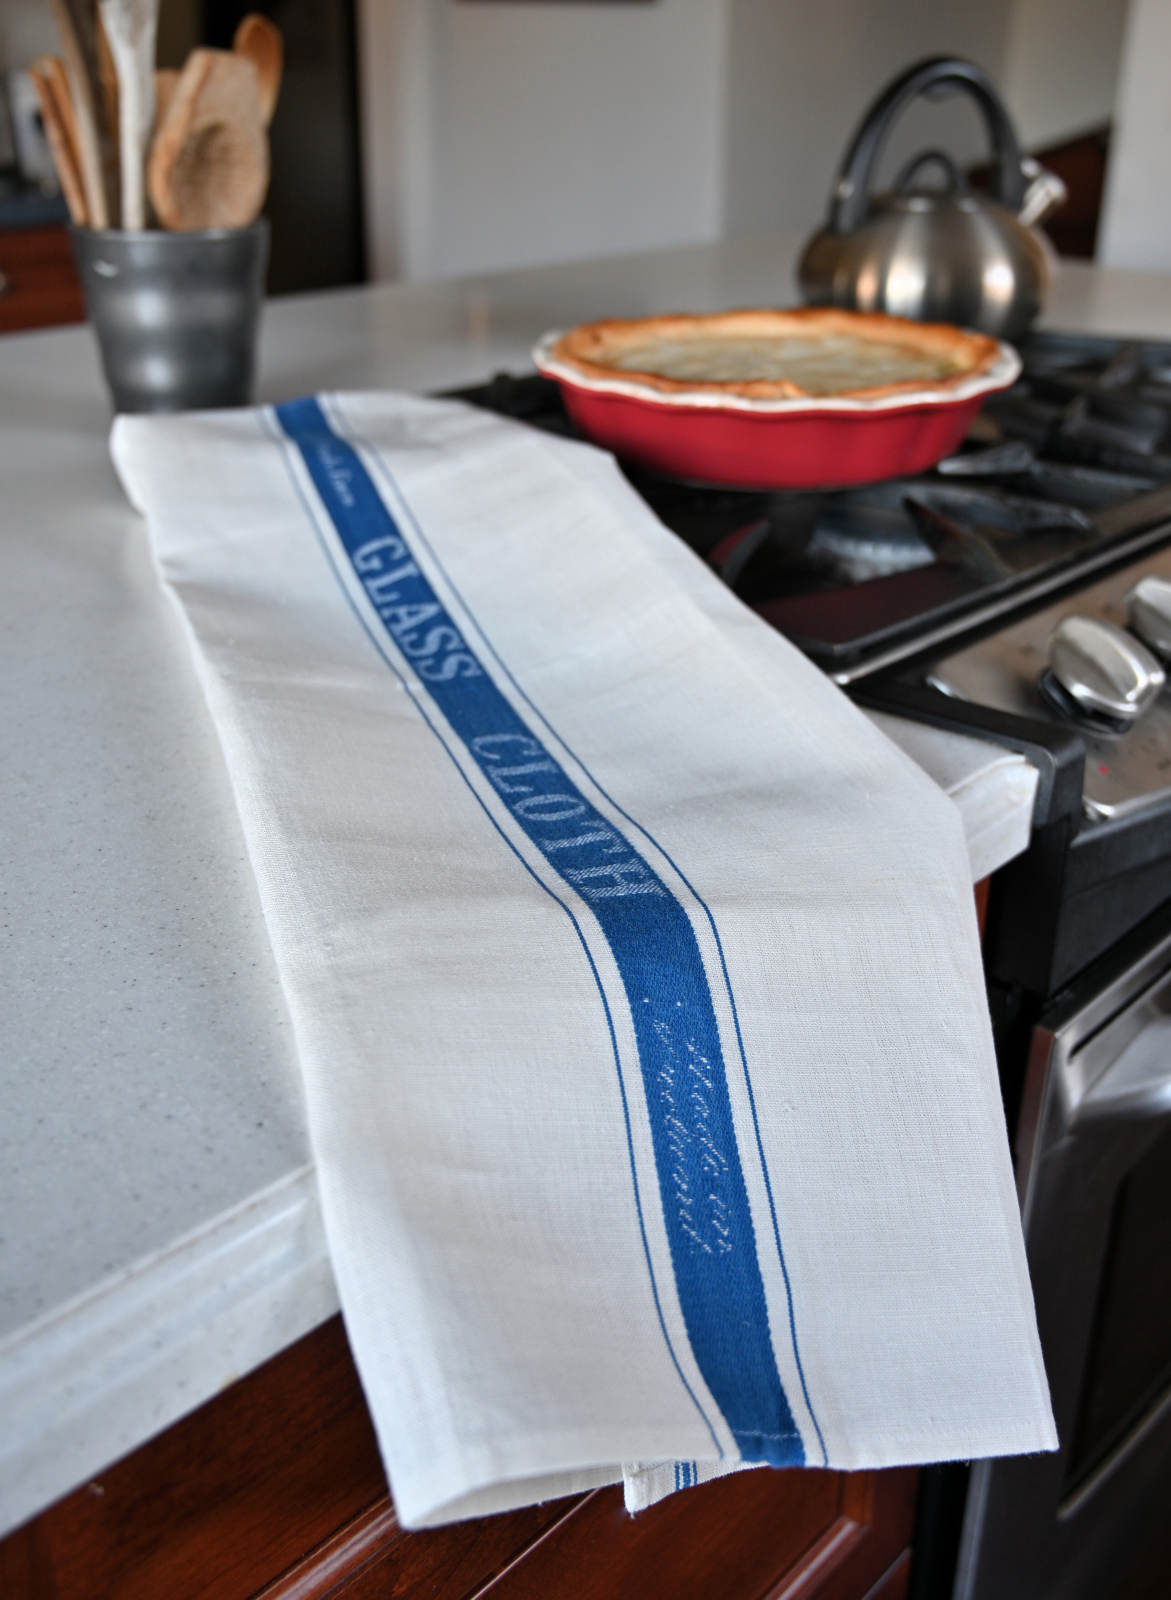 Set of 2 Blue Natural Linen Tea Towels Multistripe - LinenMe